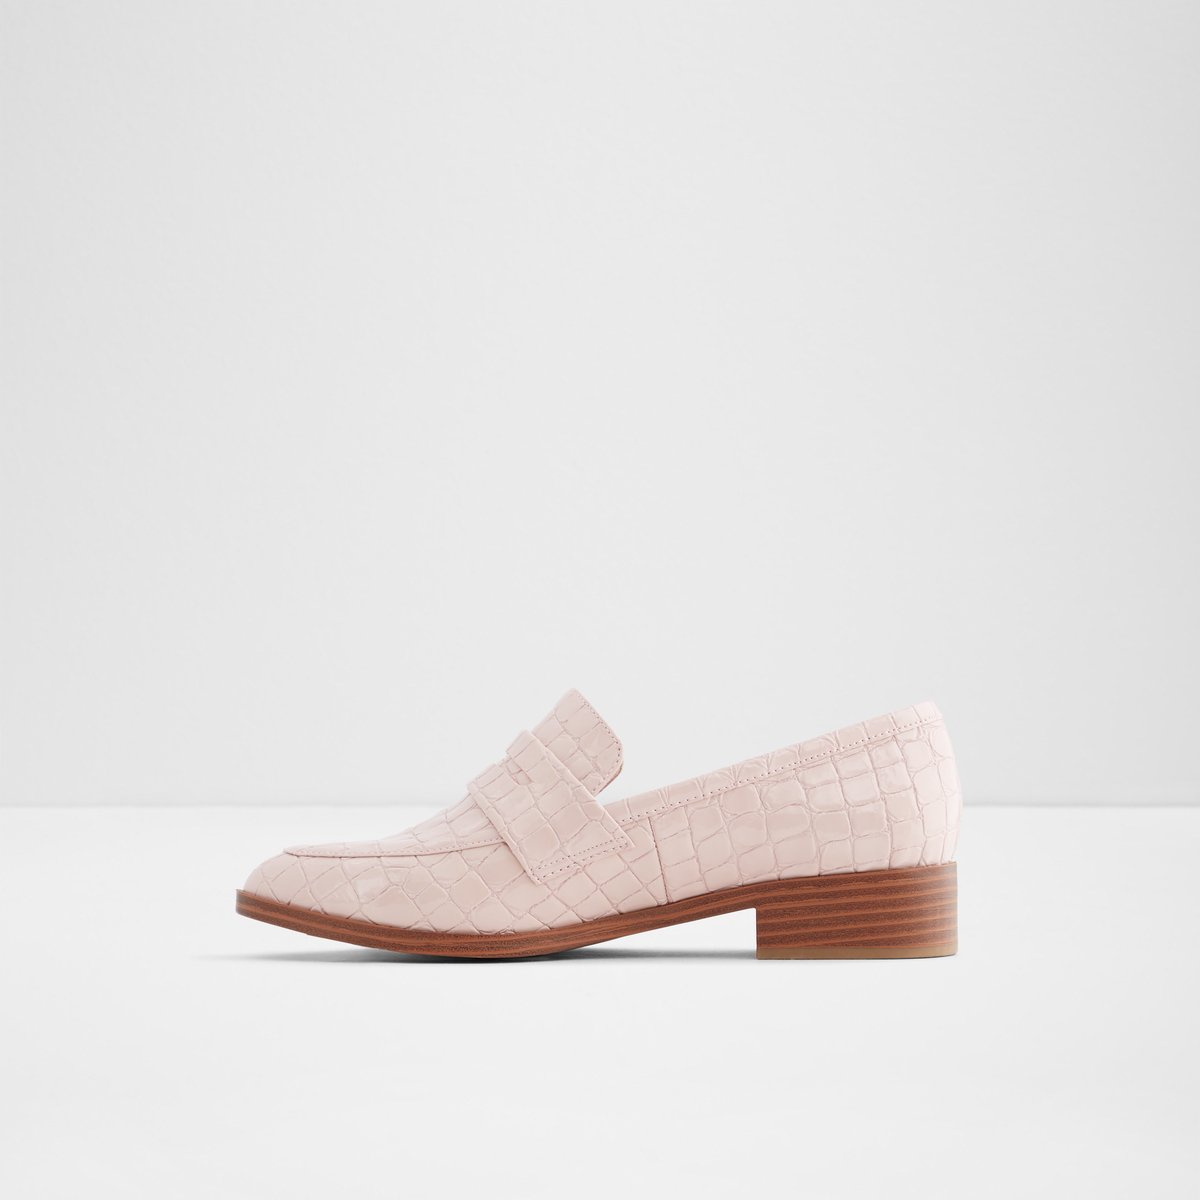 aldo pink loafers